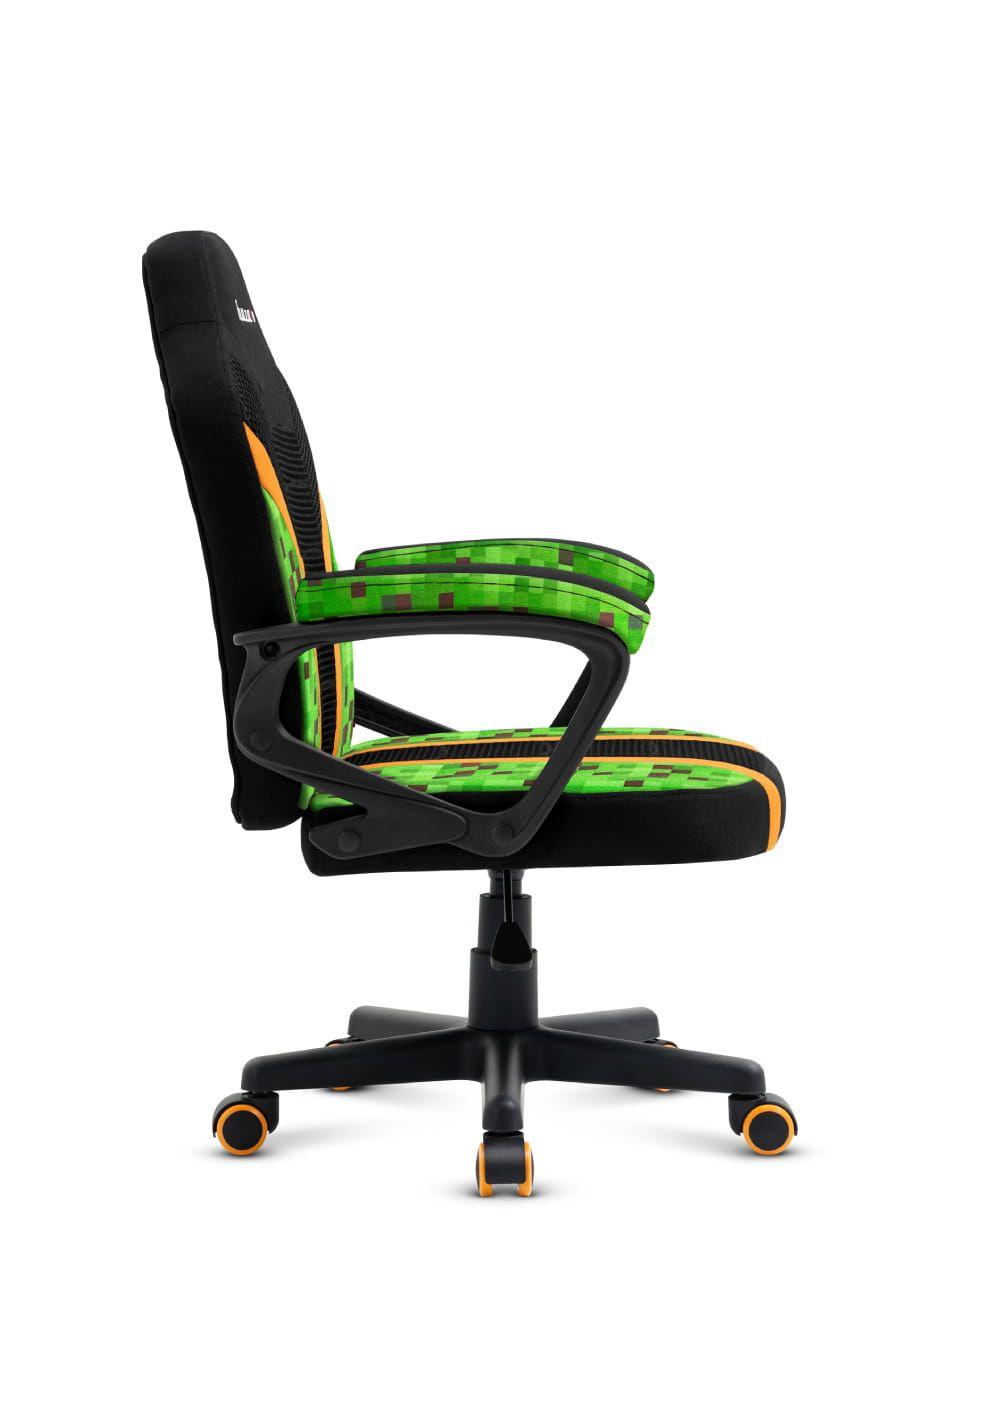 Gaming chair for children Huzaro Ranger 1.0 Pixel Mesh